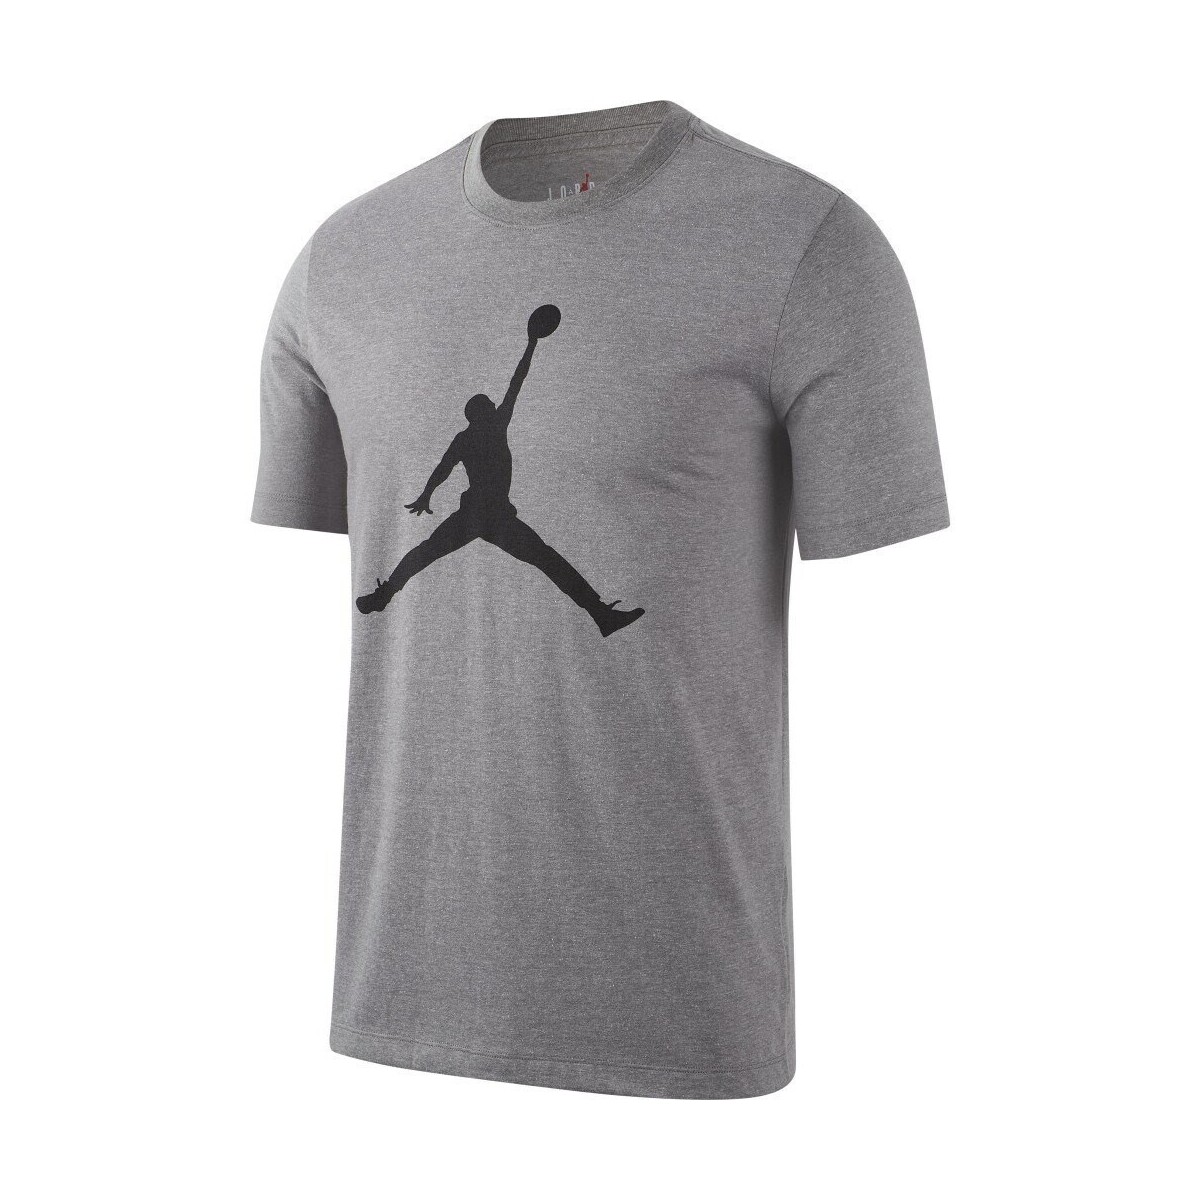 Clothing Men Short-sleeved t-shirts Nike Jordan Jumpman SS Crew Grey